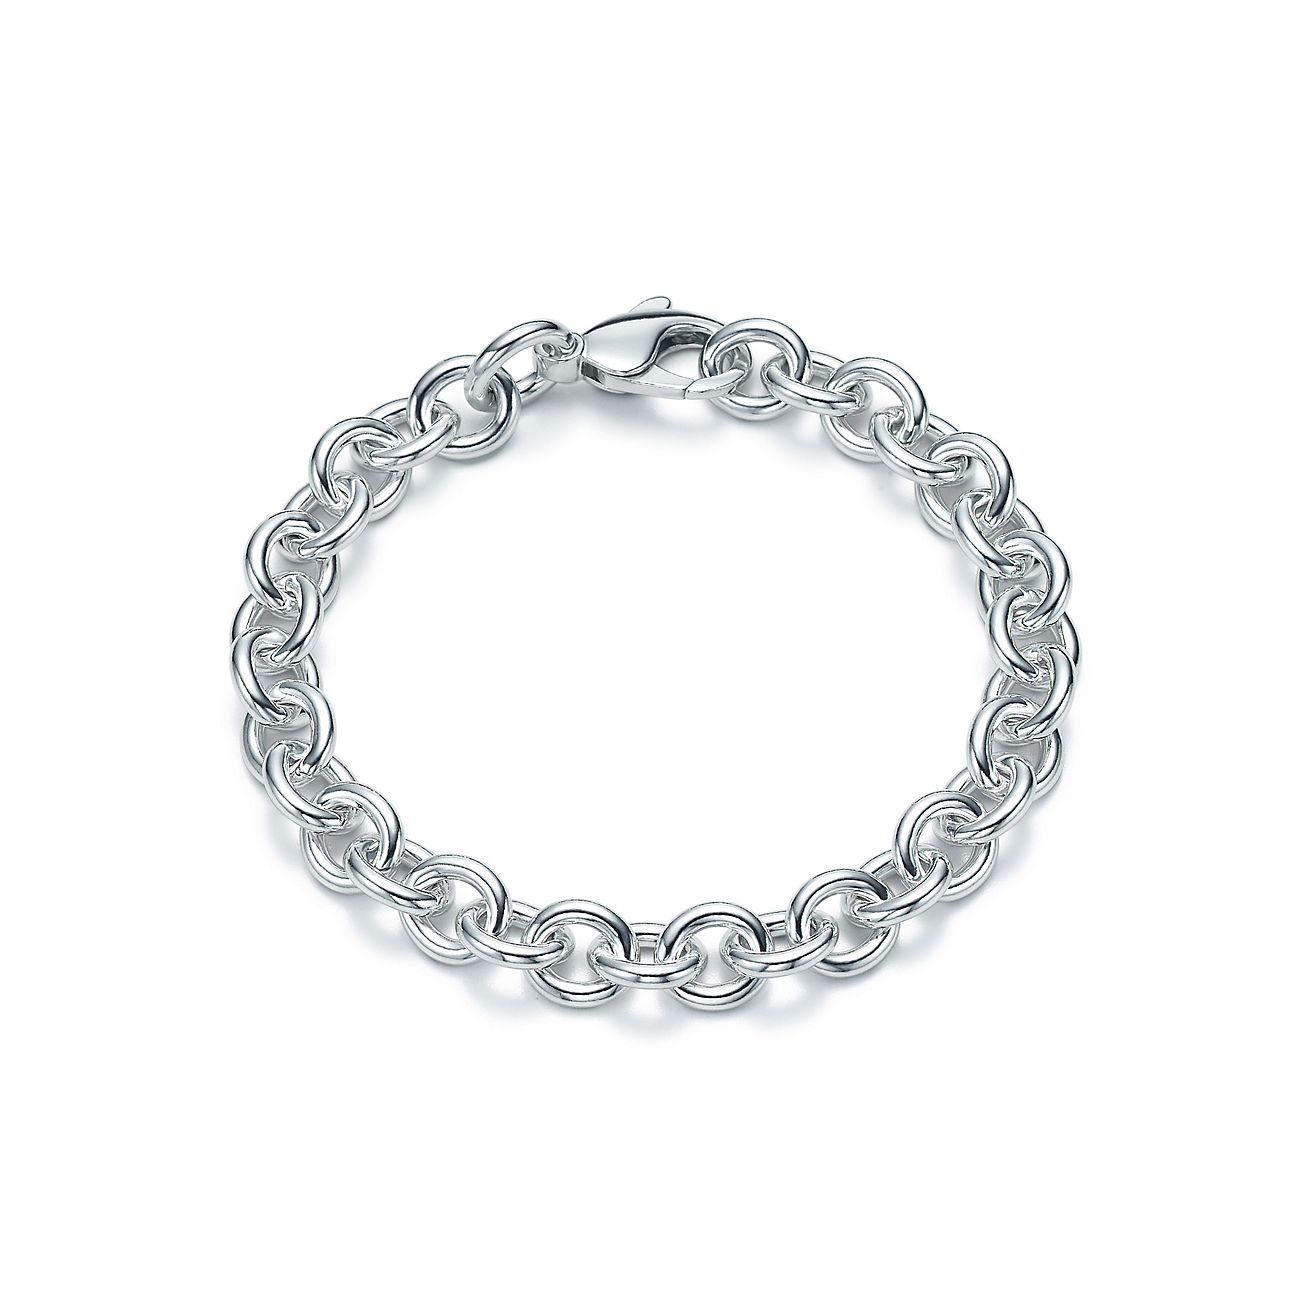 Medium Round Link Bracelet in Sterling Silver, 7 Long